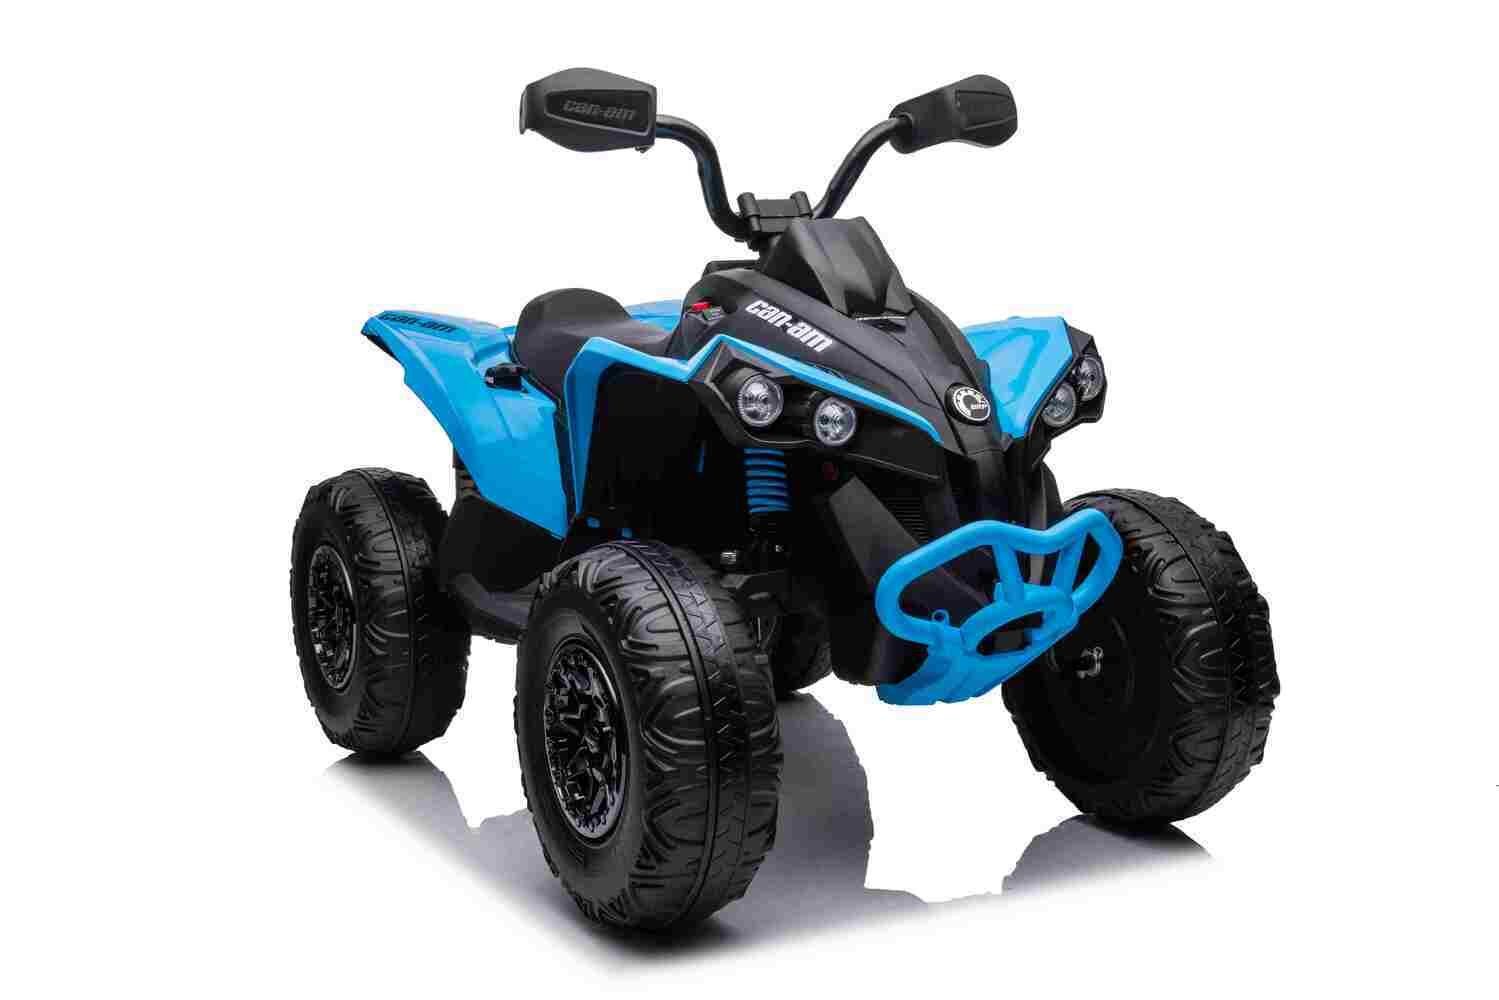 BoGi Elektro-Kinderquad Can-am ATV Quad Kinderfahrzeug Elektrofahrzeug Elektroquad 4x4 Antrieb Blau